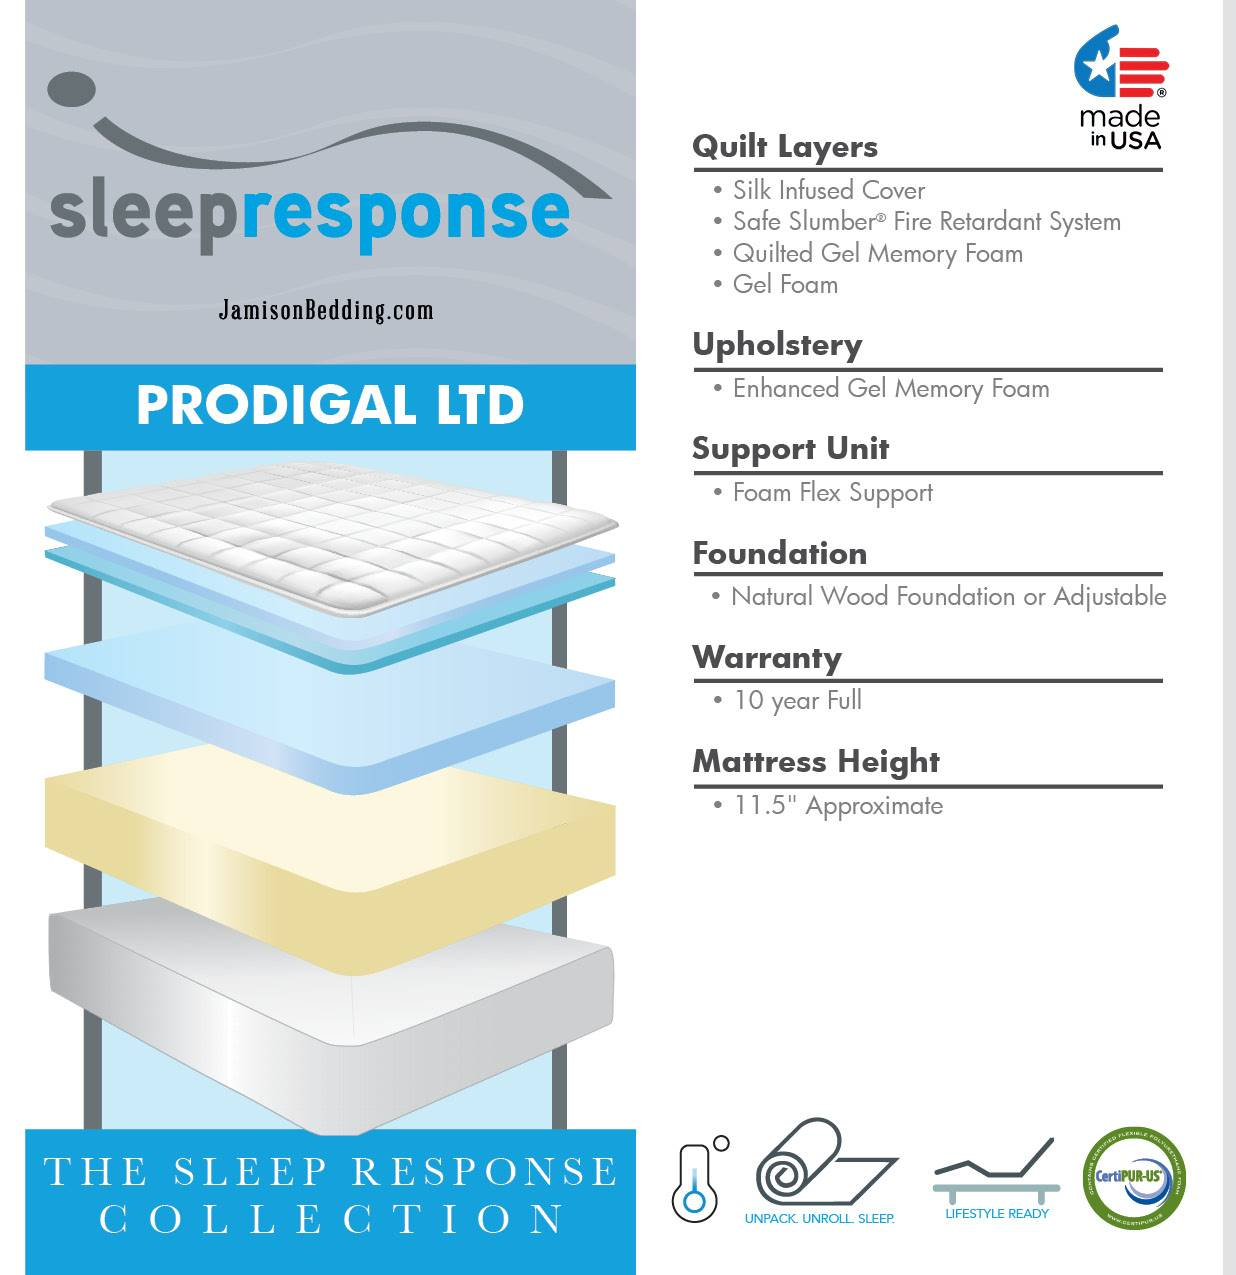 The Jamison Bedding Sleep Response Prodigal LTD cushion firm mattress is available at Bratz-CFW in Fort Myers, FL. Spec sheet.